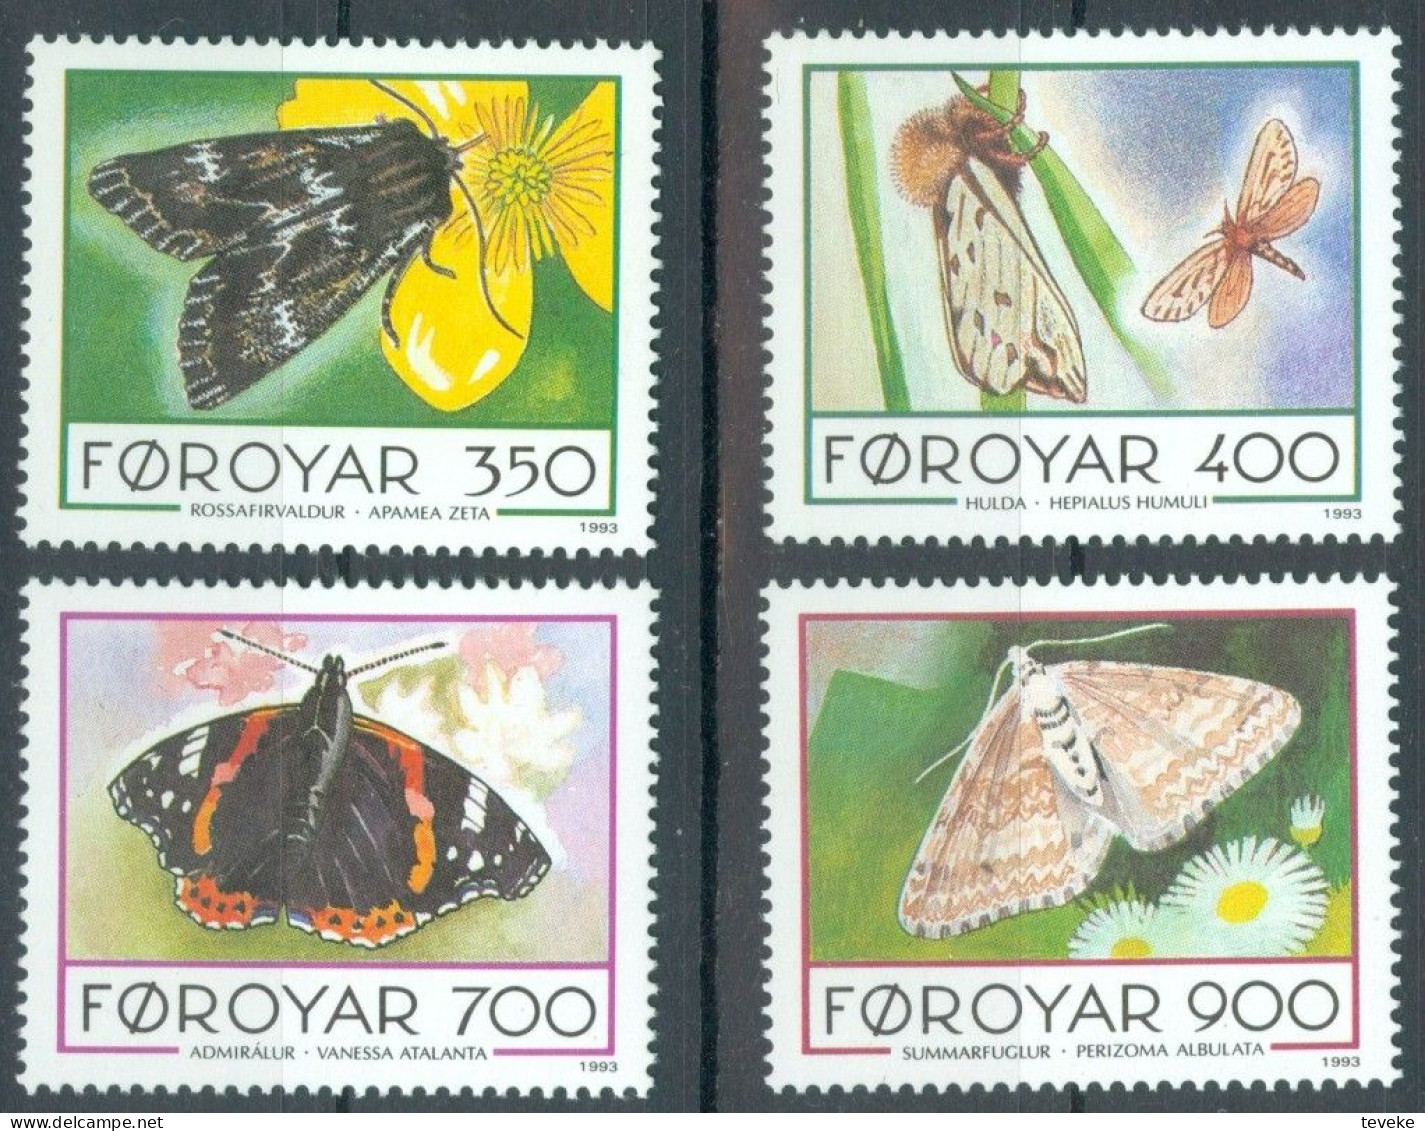 FAEROËR 1993 - MiNr. 252/255 - **/MNH - Fauna - Butterflies - Faroe Islands